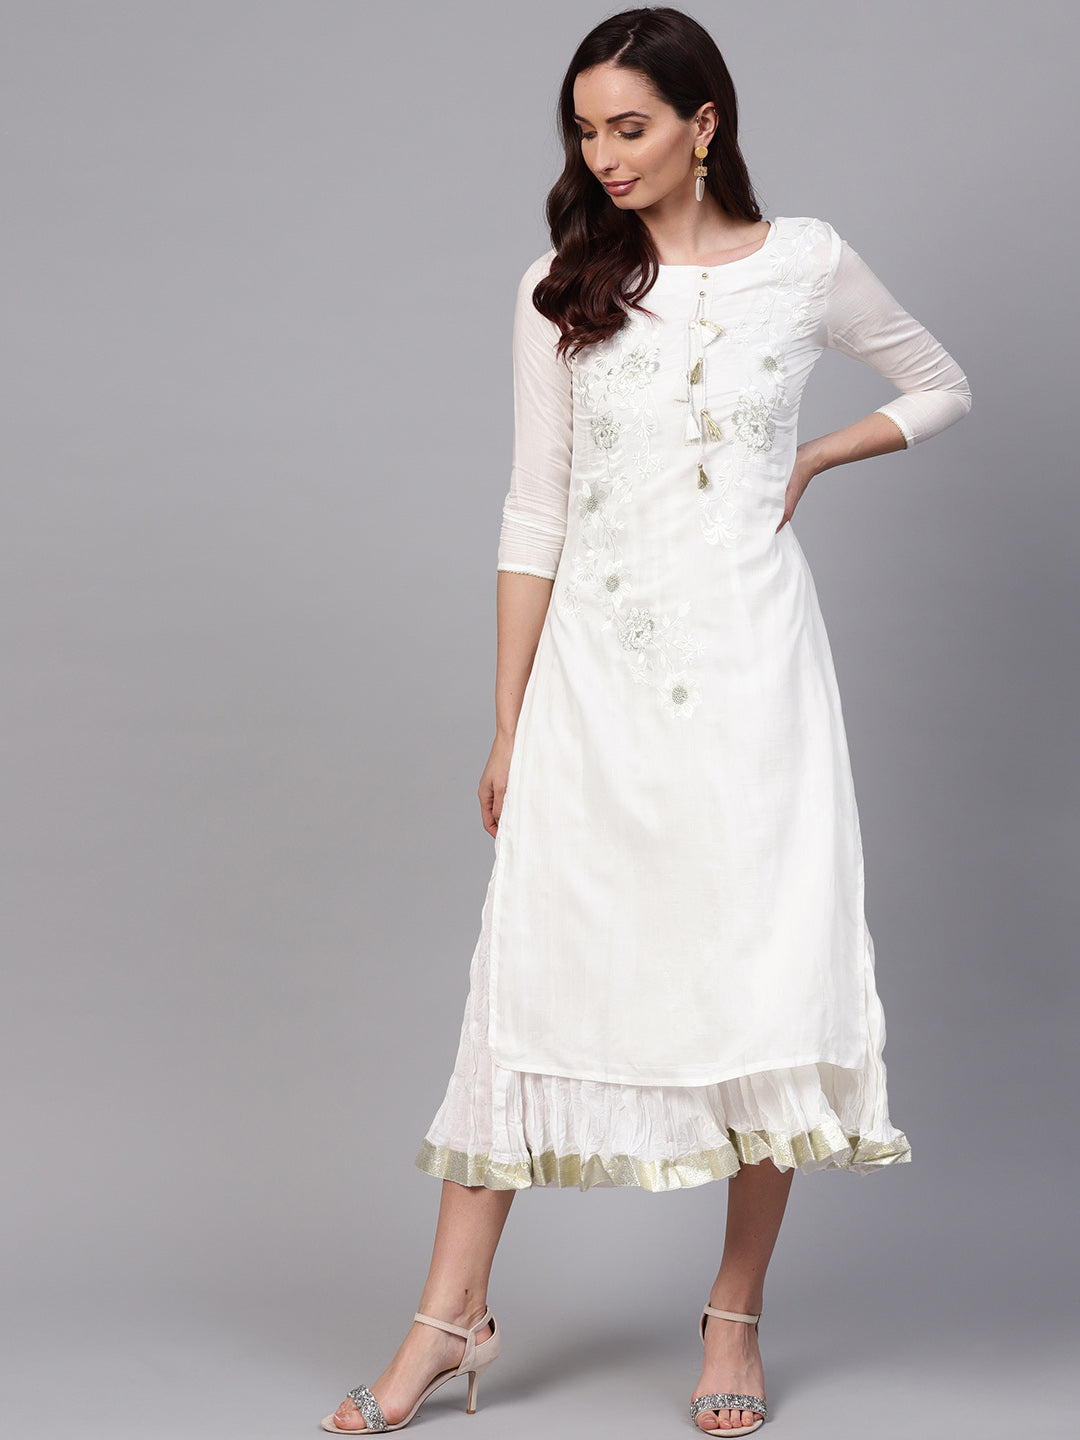 Ishin Women's Cotton White Embroidered Anarkali Dress